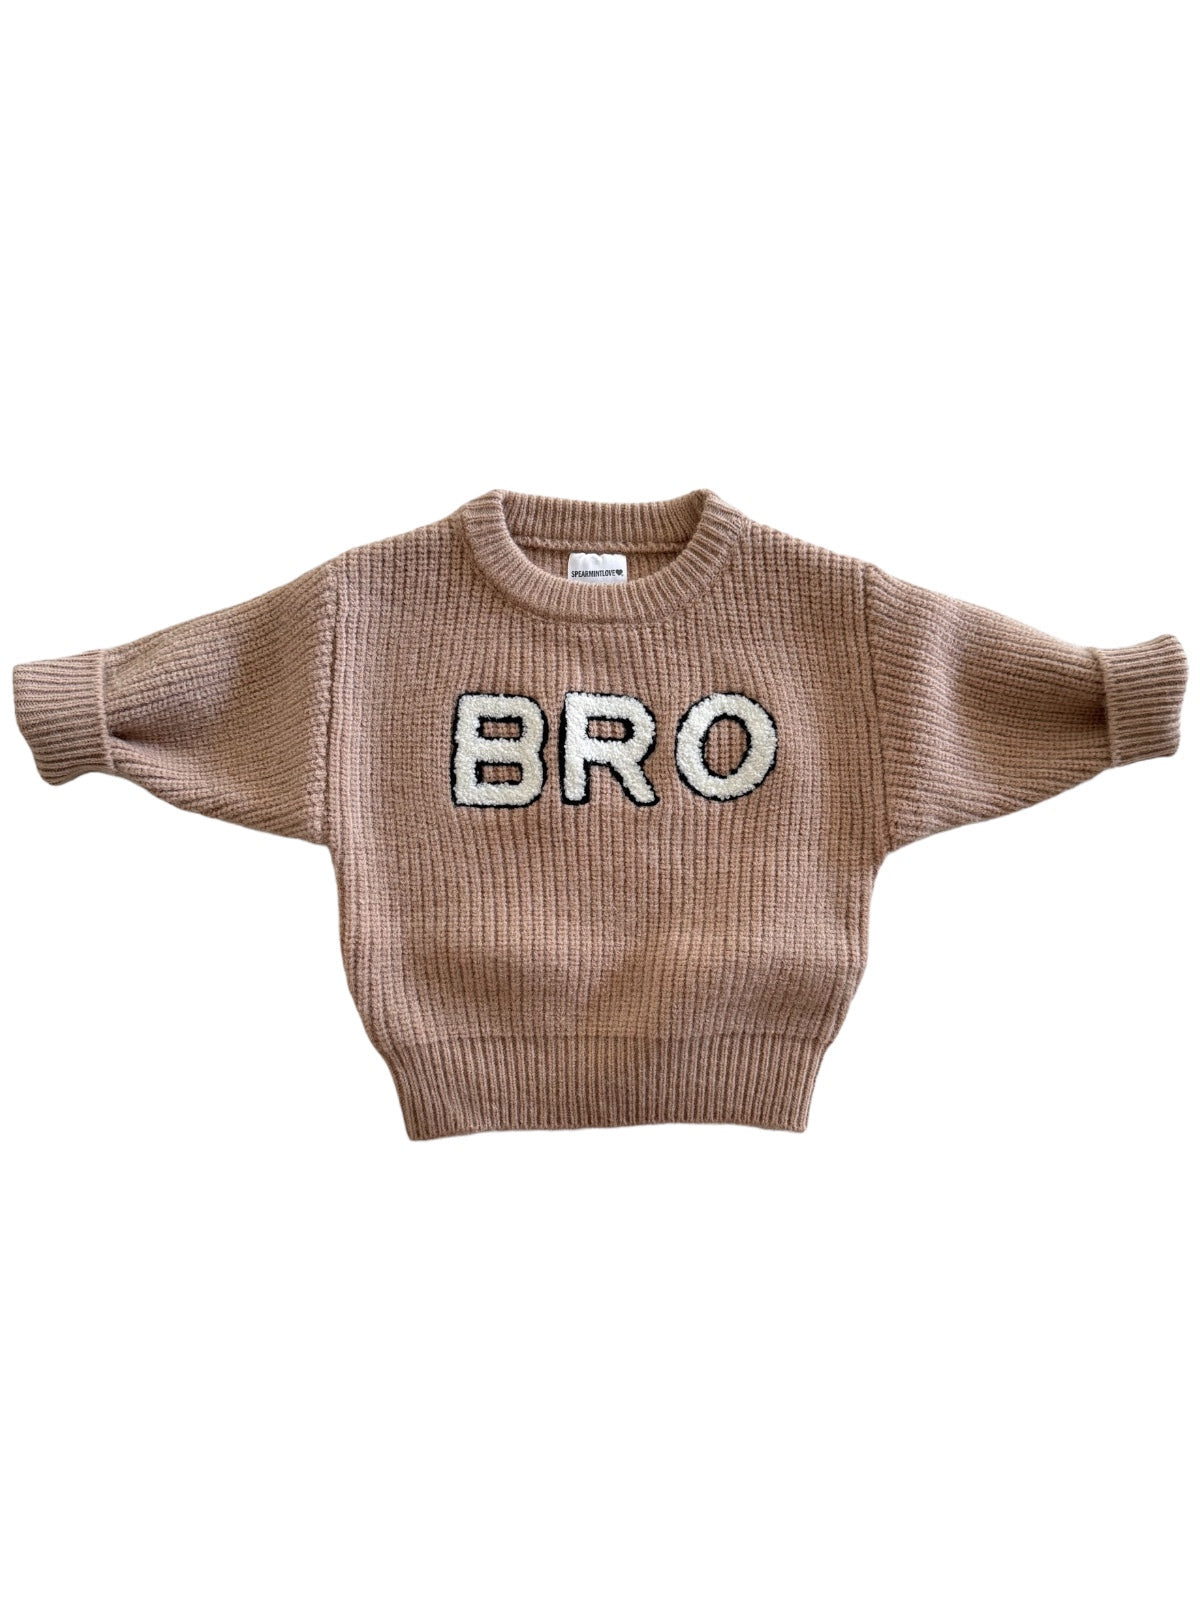 Bro Knit Sweater, Clay